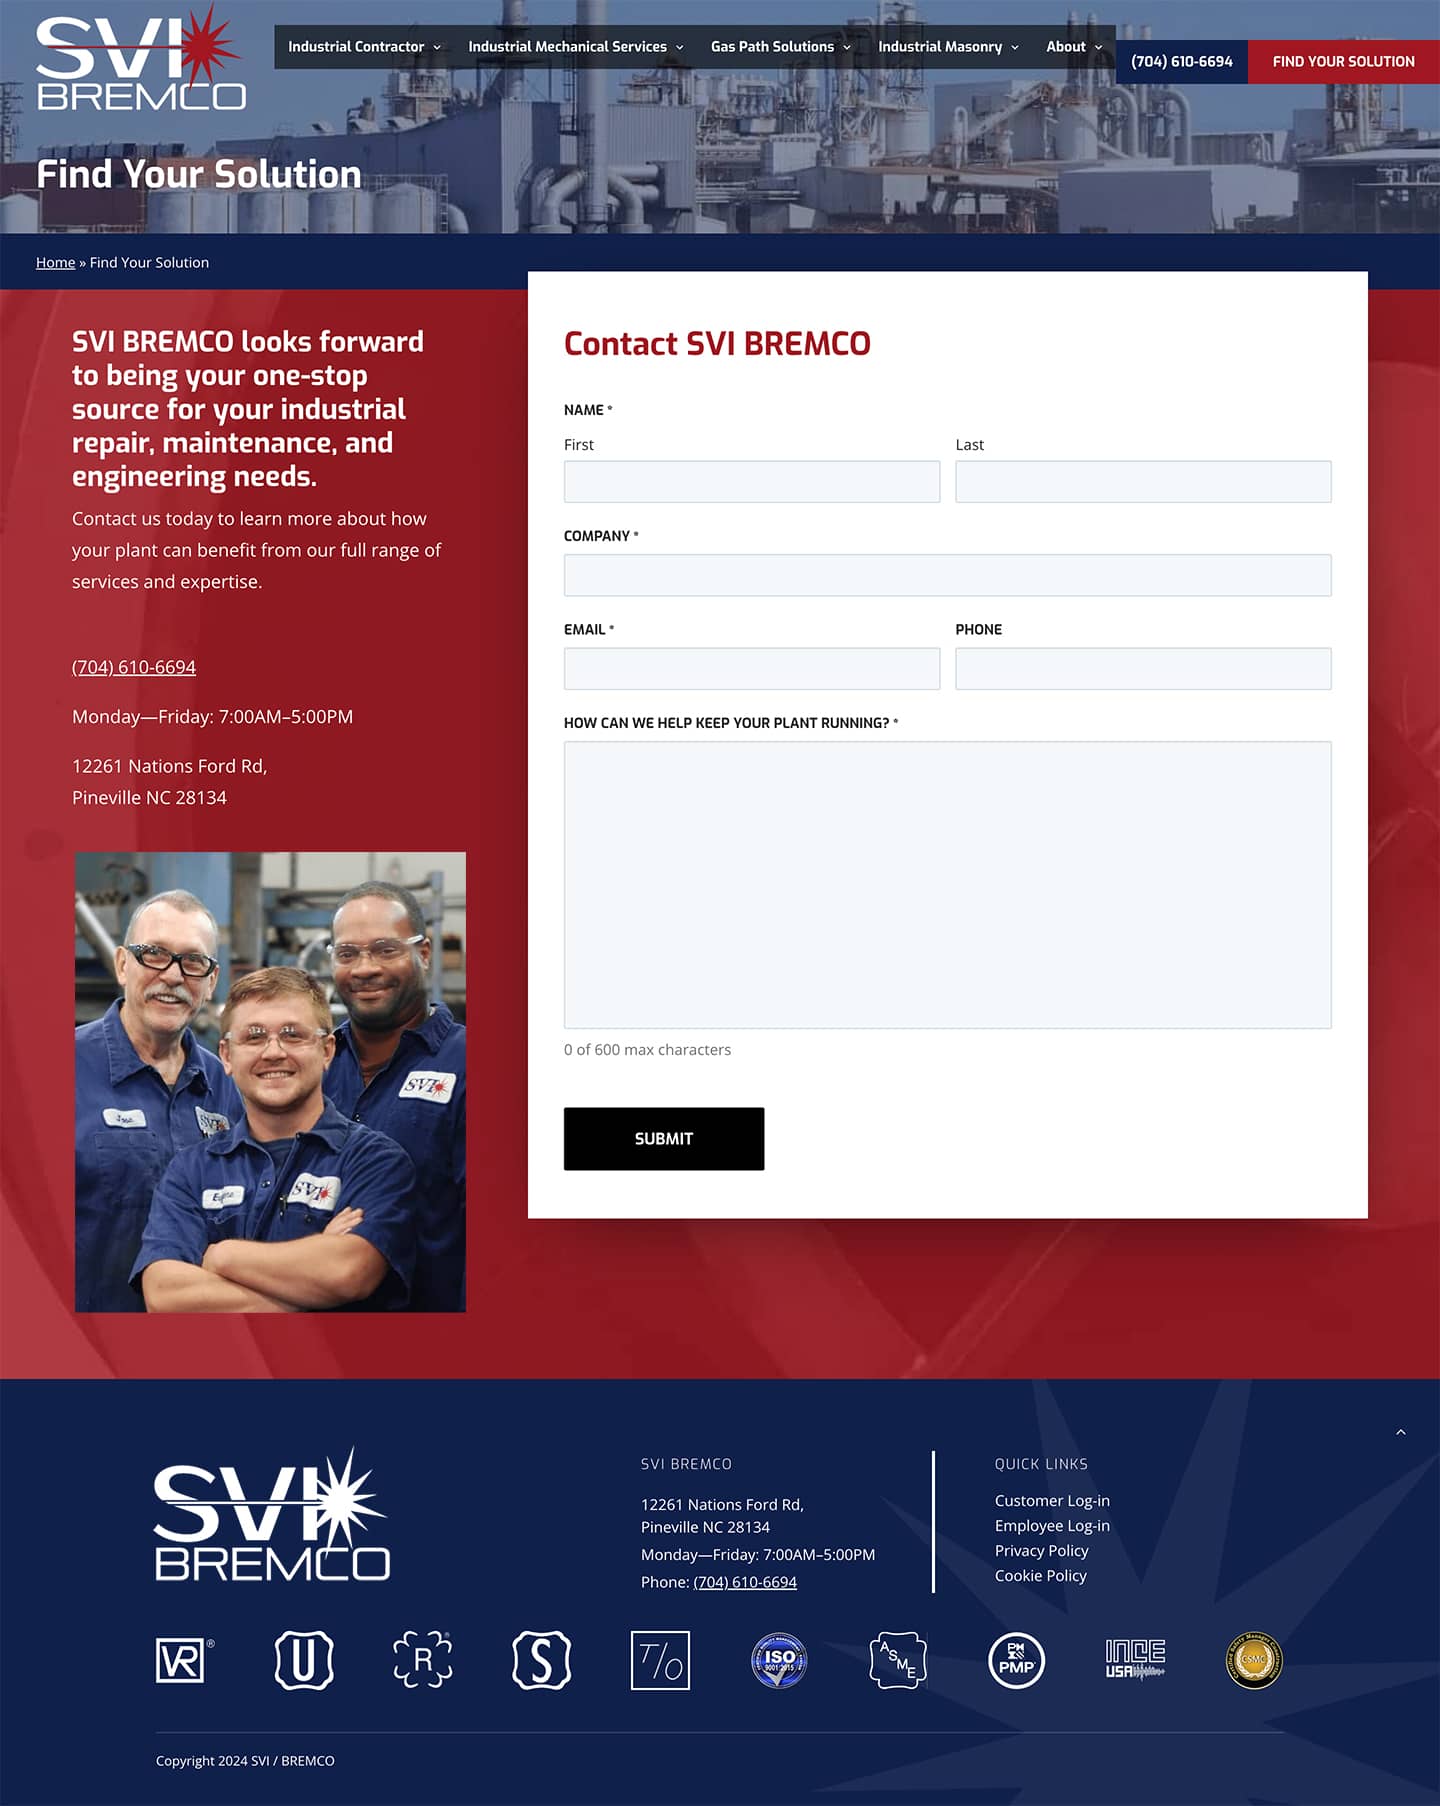 SVI BREMCO website contact page